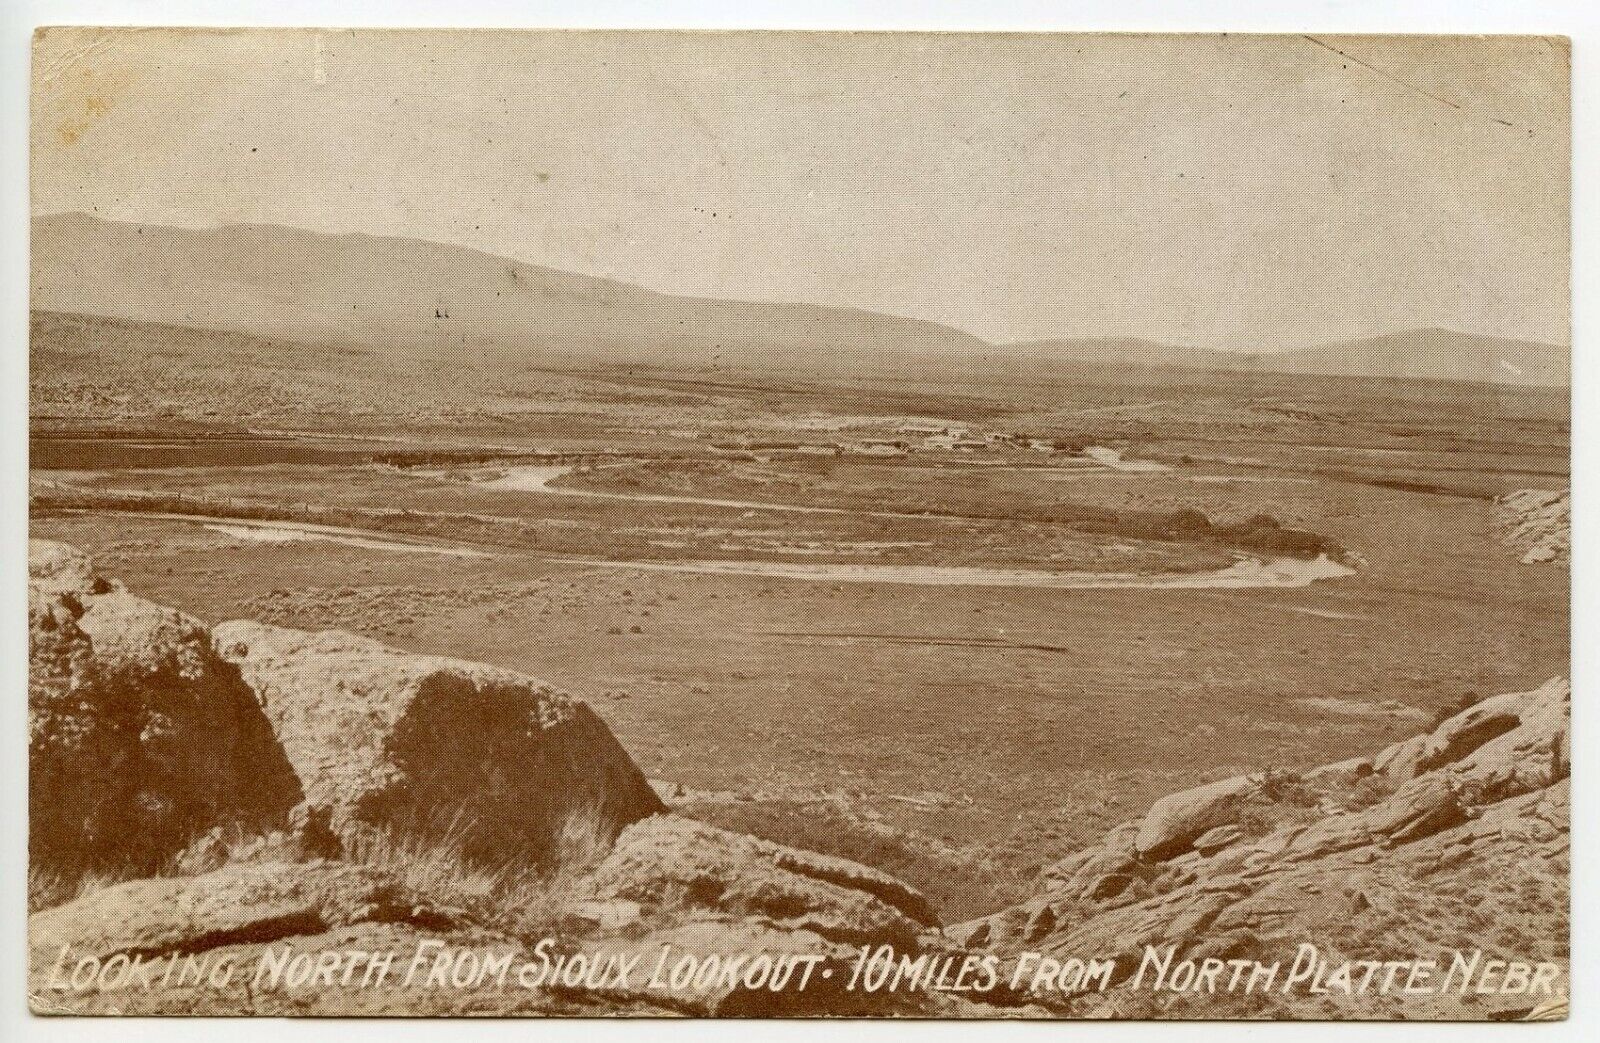 SIOUX LOOKOUT, near NORTH PLATTE NEBRASKA, Western Historic Point, RPO 1909